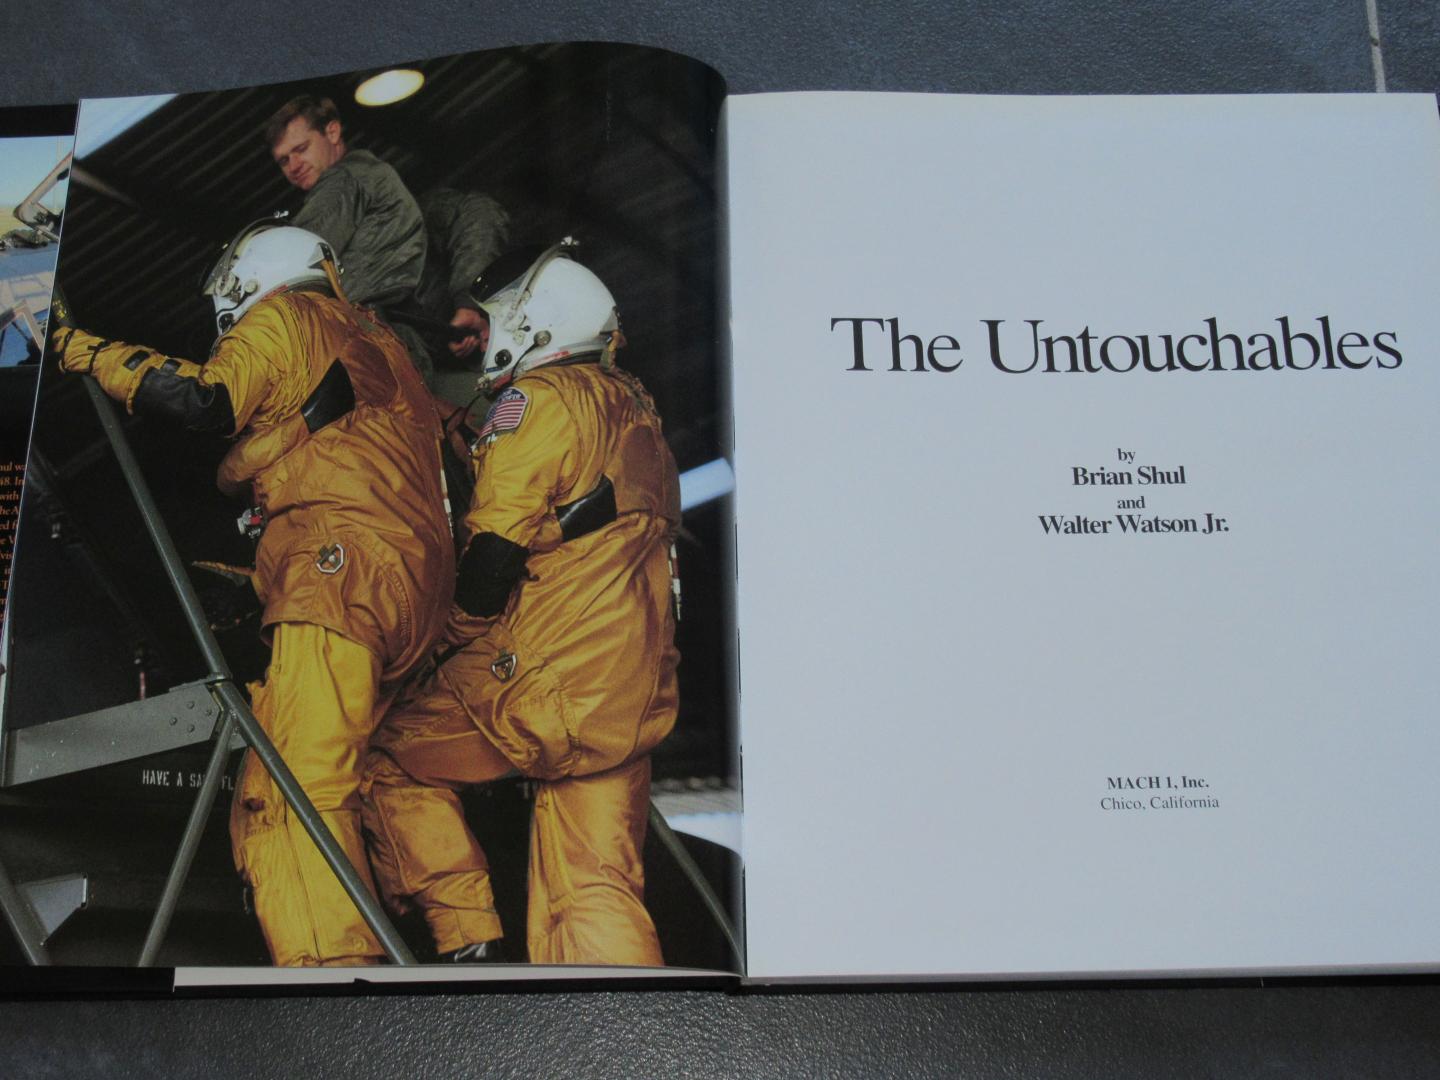 Shul, Brian & Watson Jr., Walter - The Untouchables : Mission Accomplished (SR-71 Blackbird)